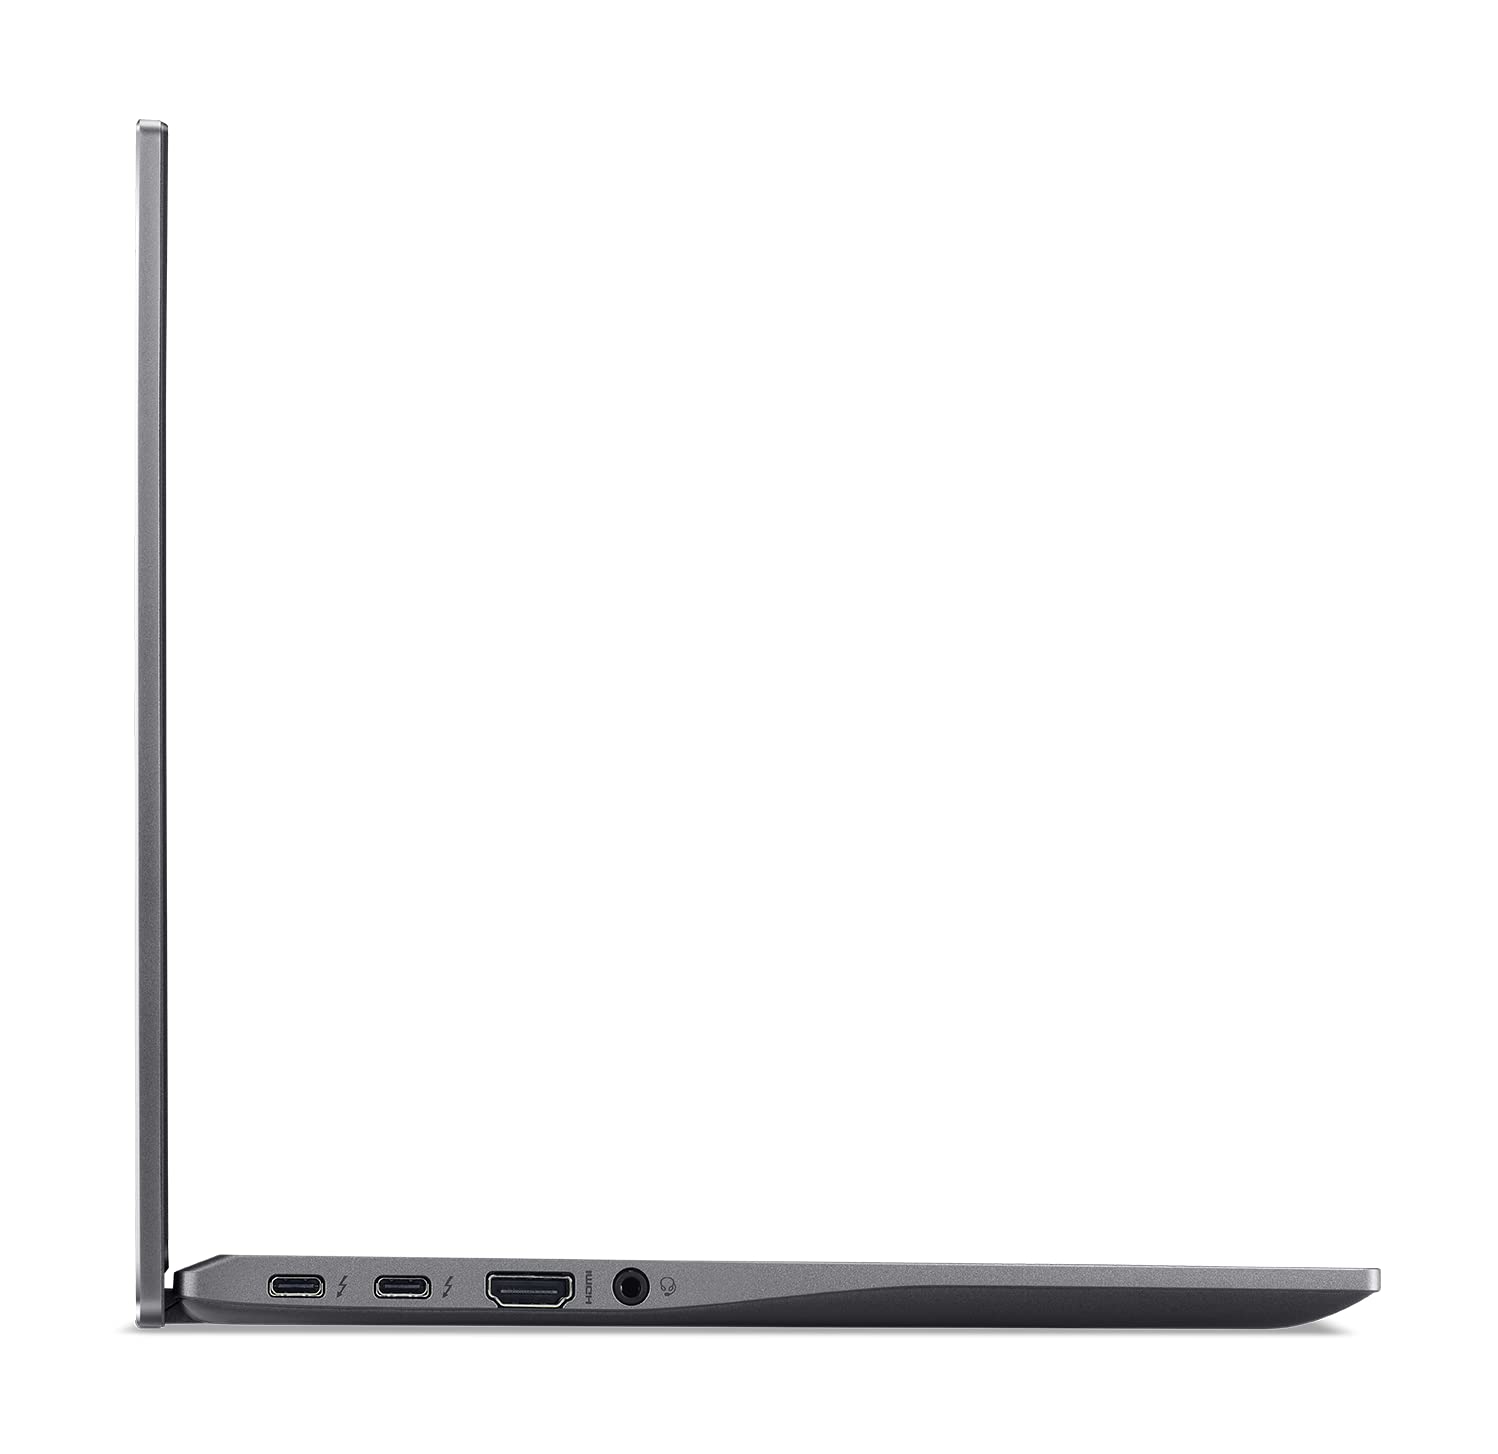 Acer Chromebook Enterprise 514 Laptop | Intel Core i3-1115G4 | 14